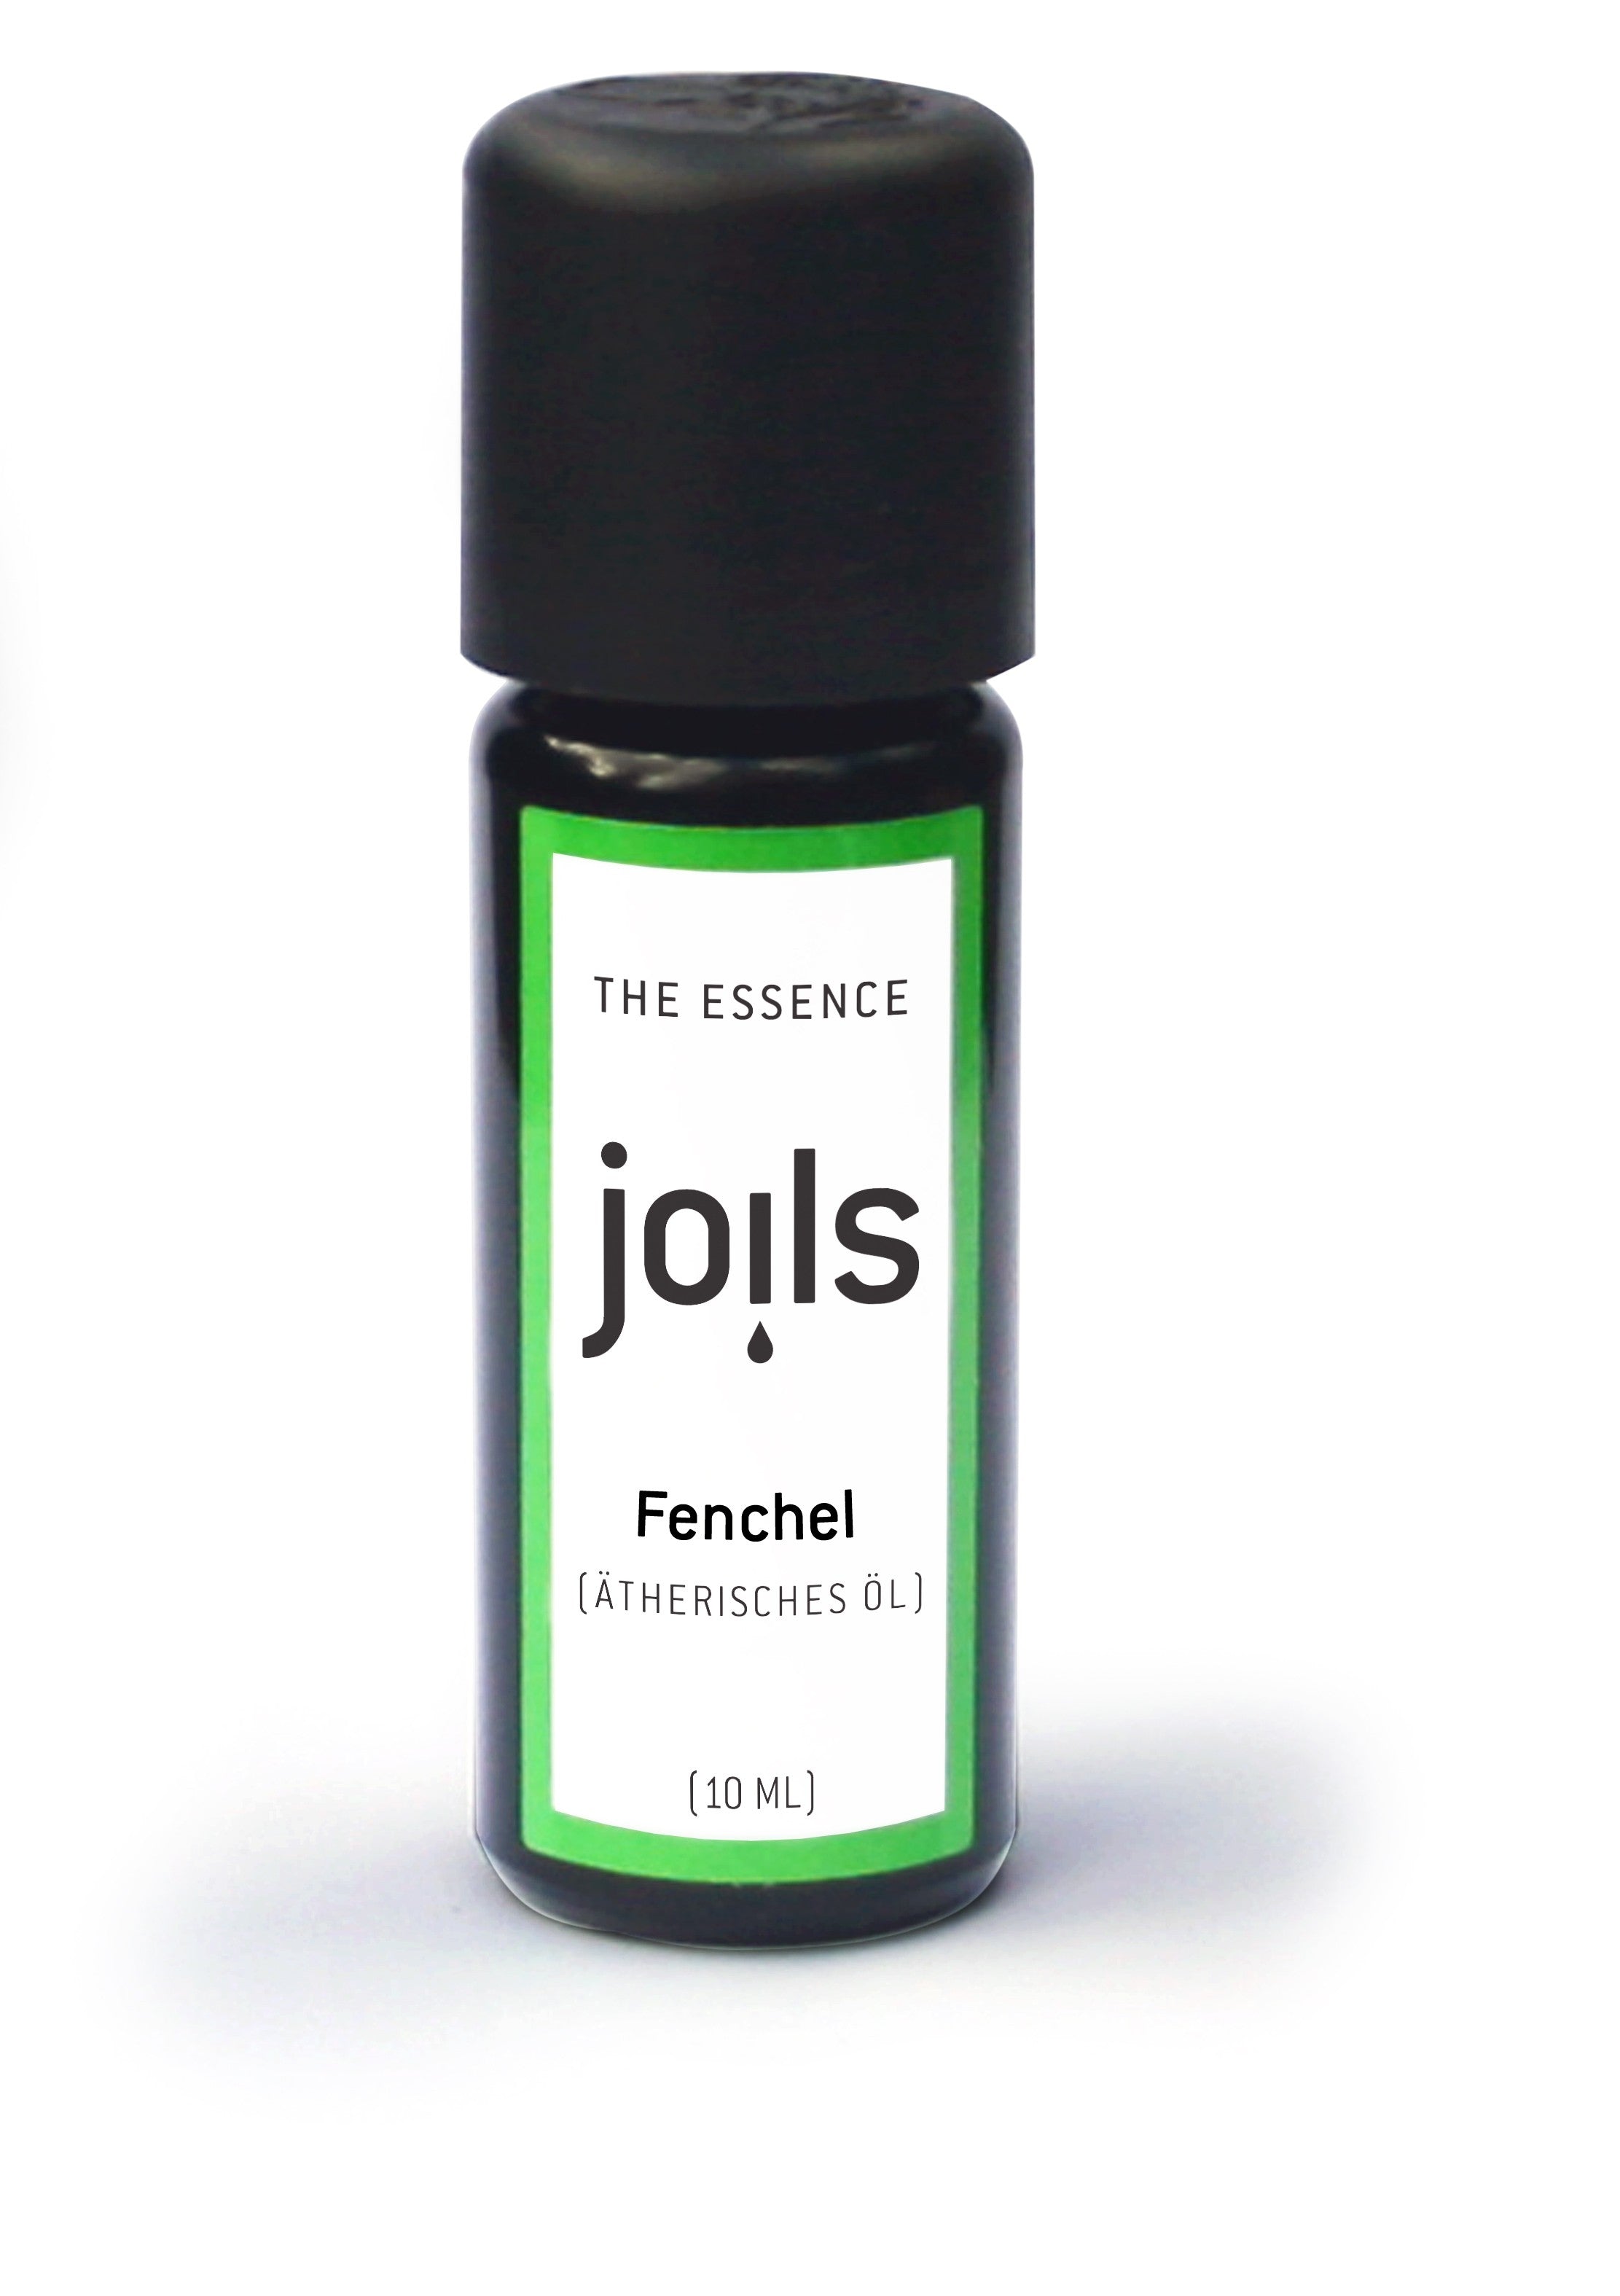 FENCHEL 10ml - Joils